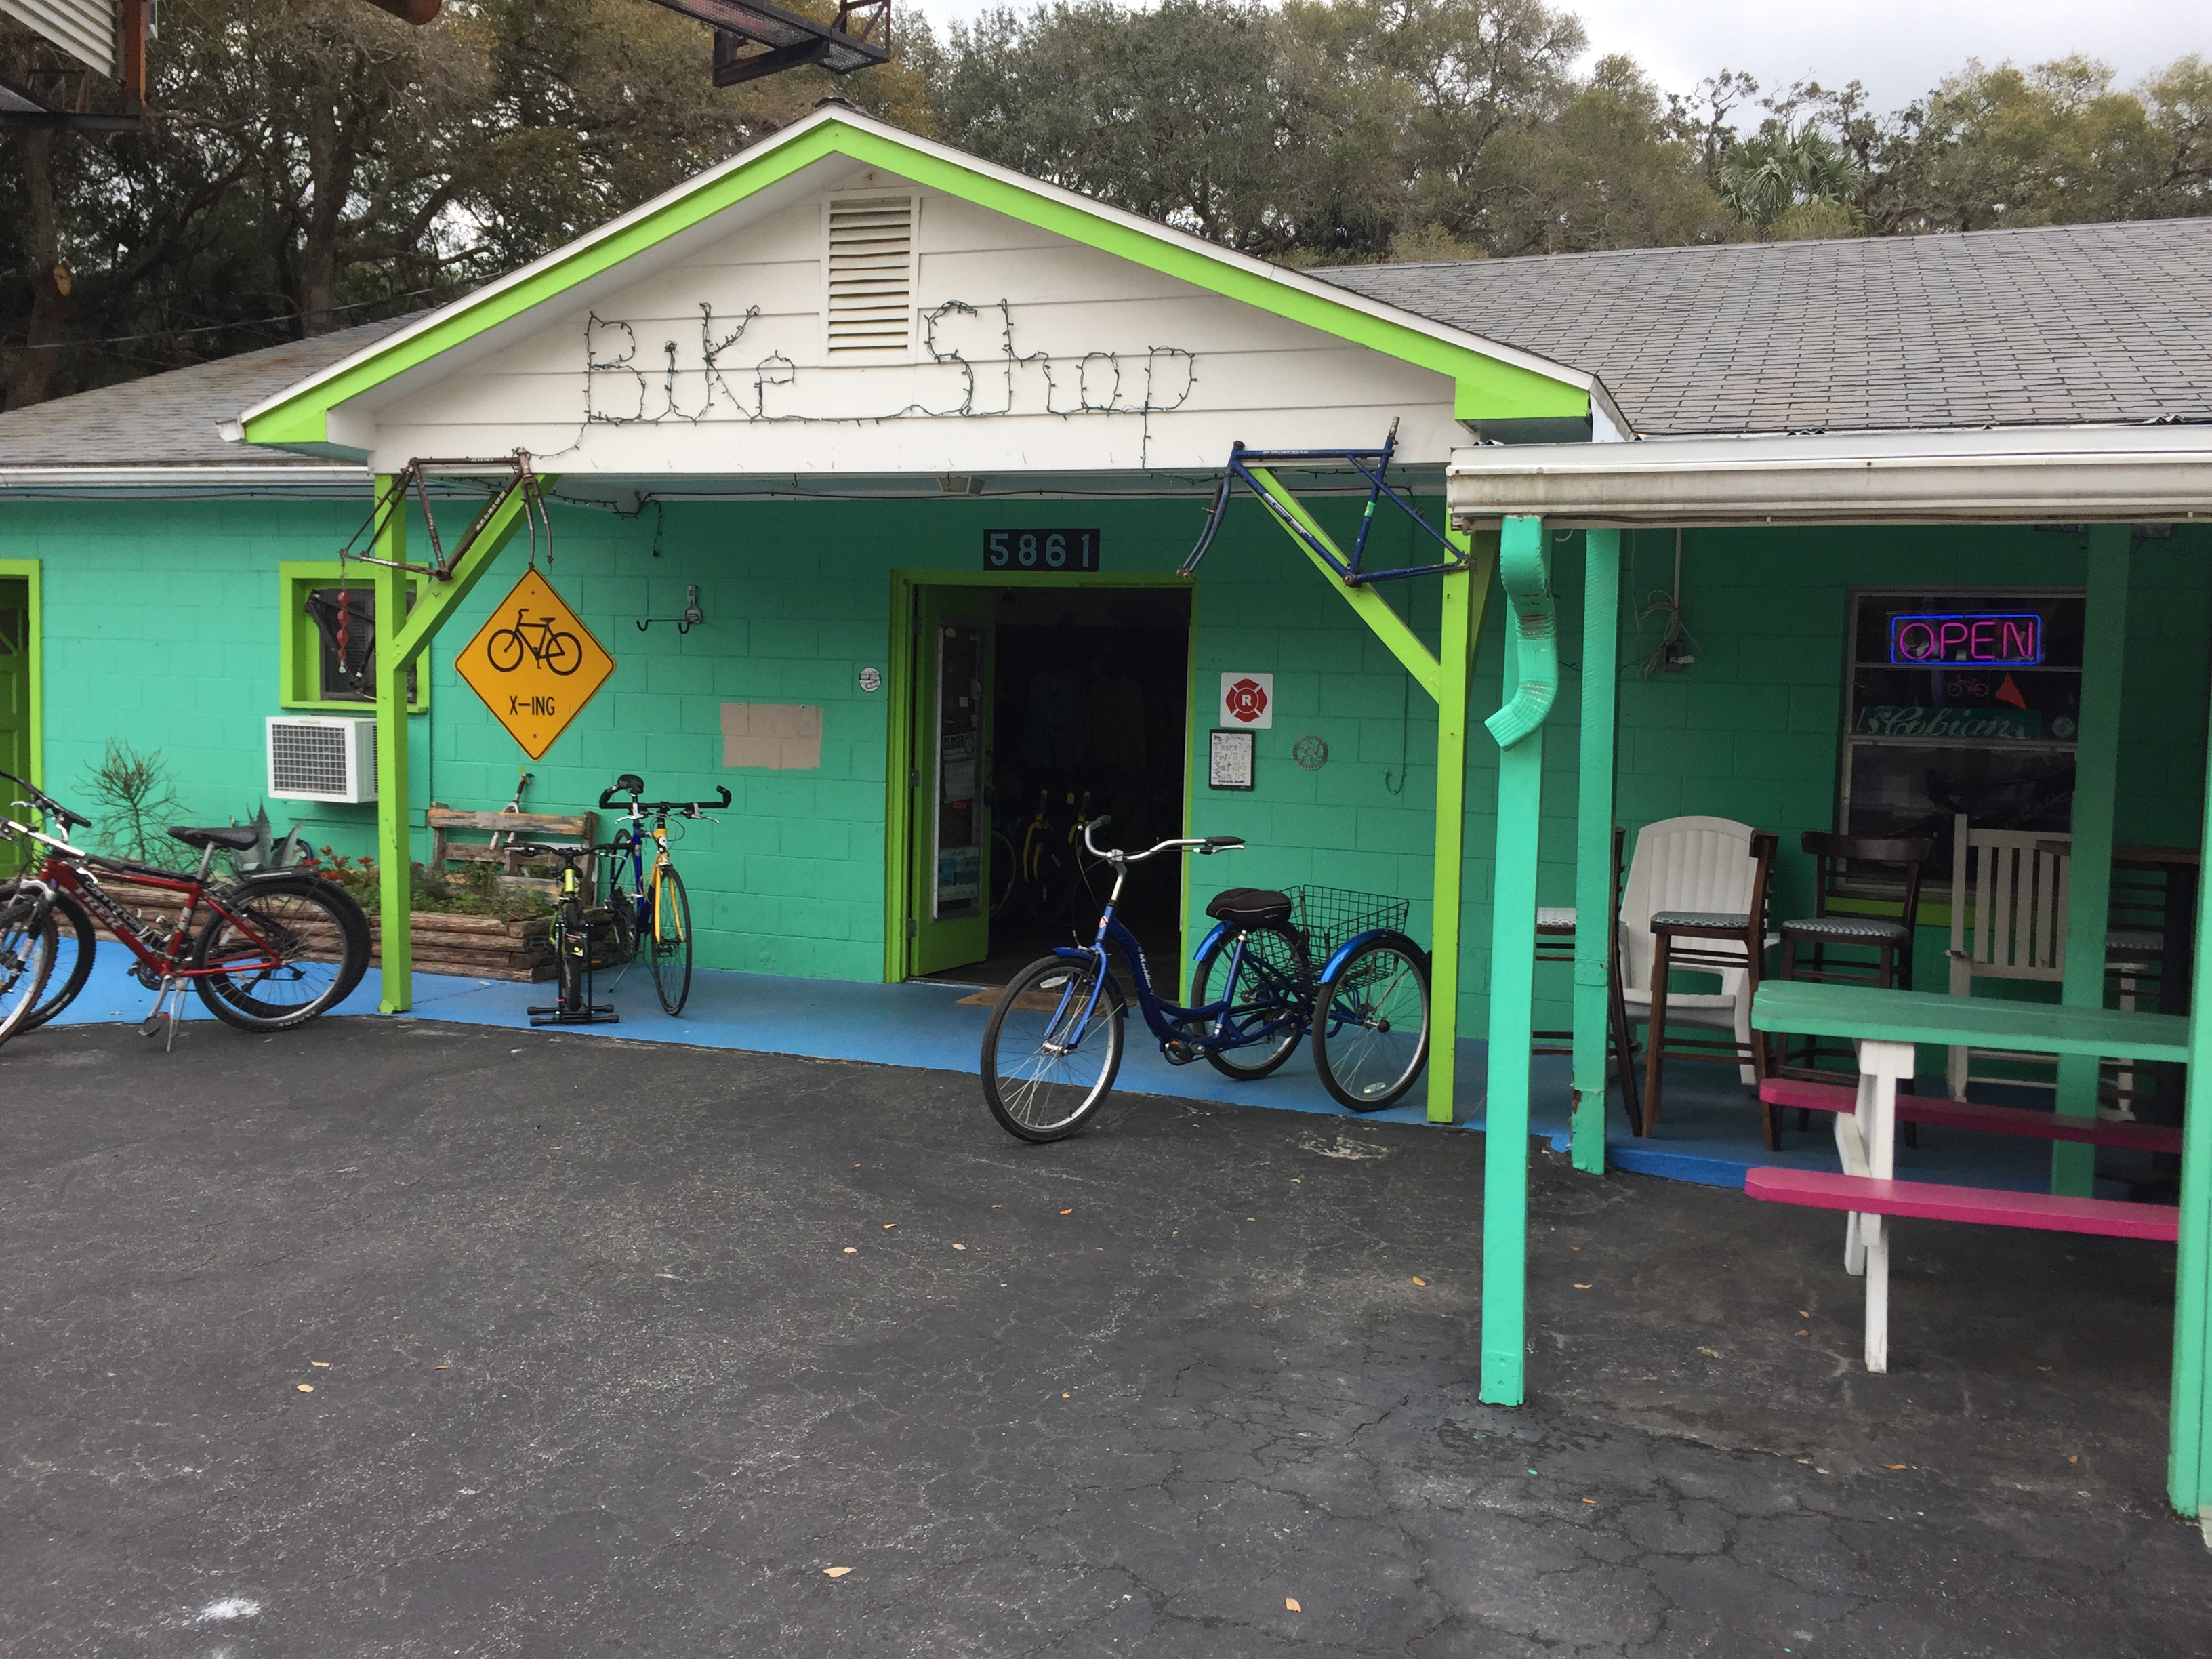 Nice bike shop along the path